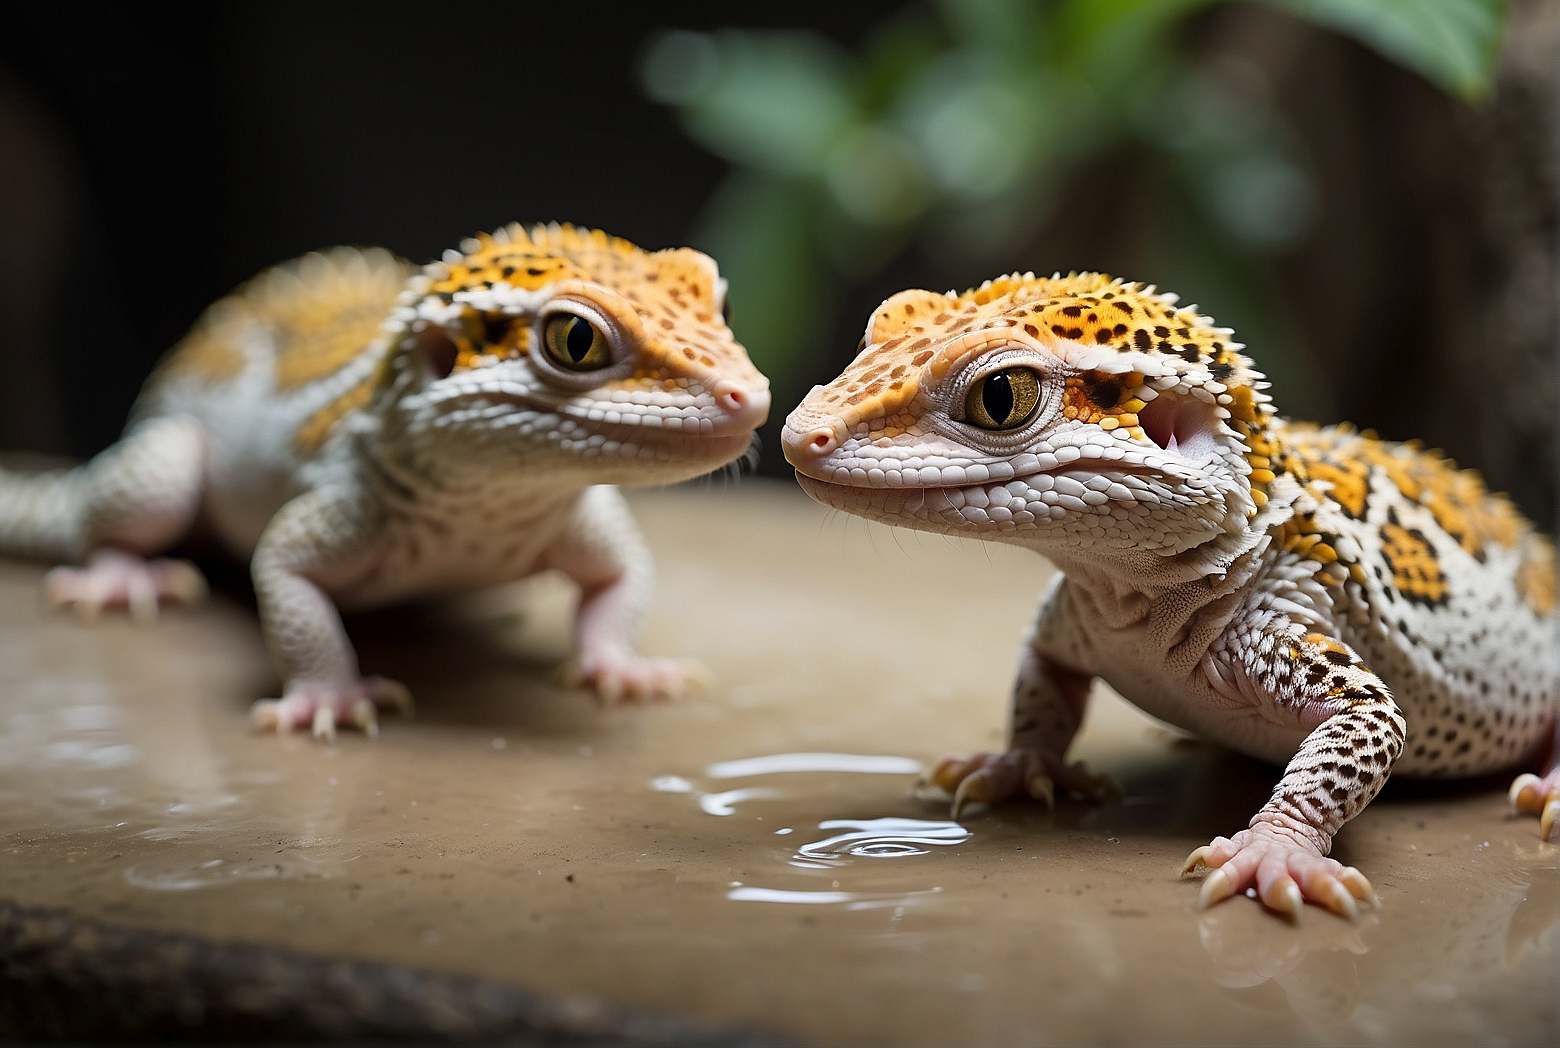 Should You Wash Your Hands After Handling A Leopard Gecko?